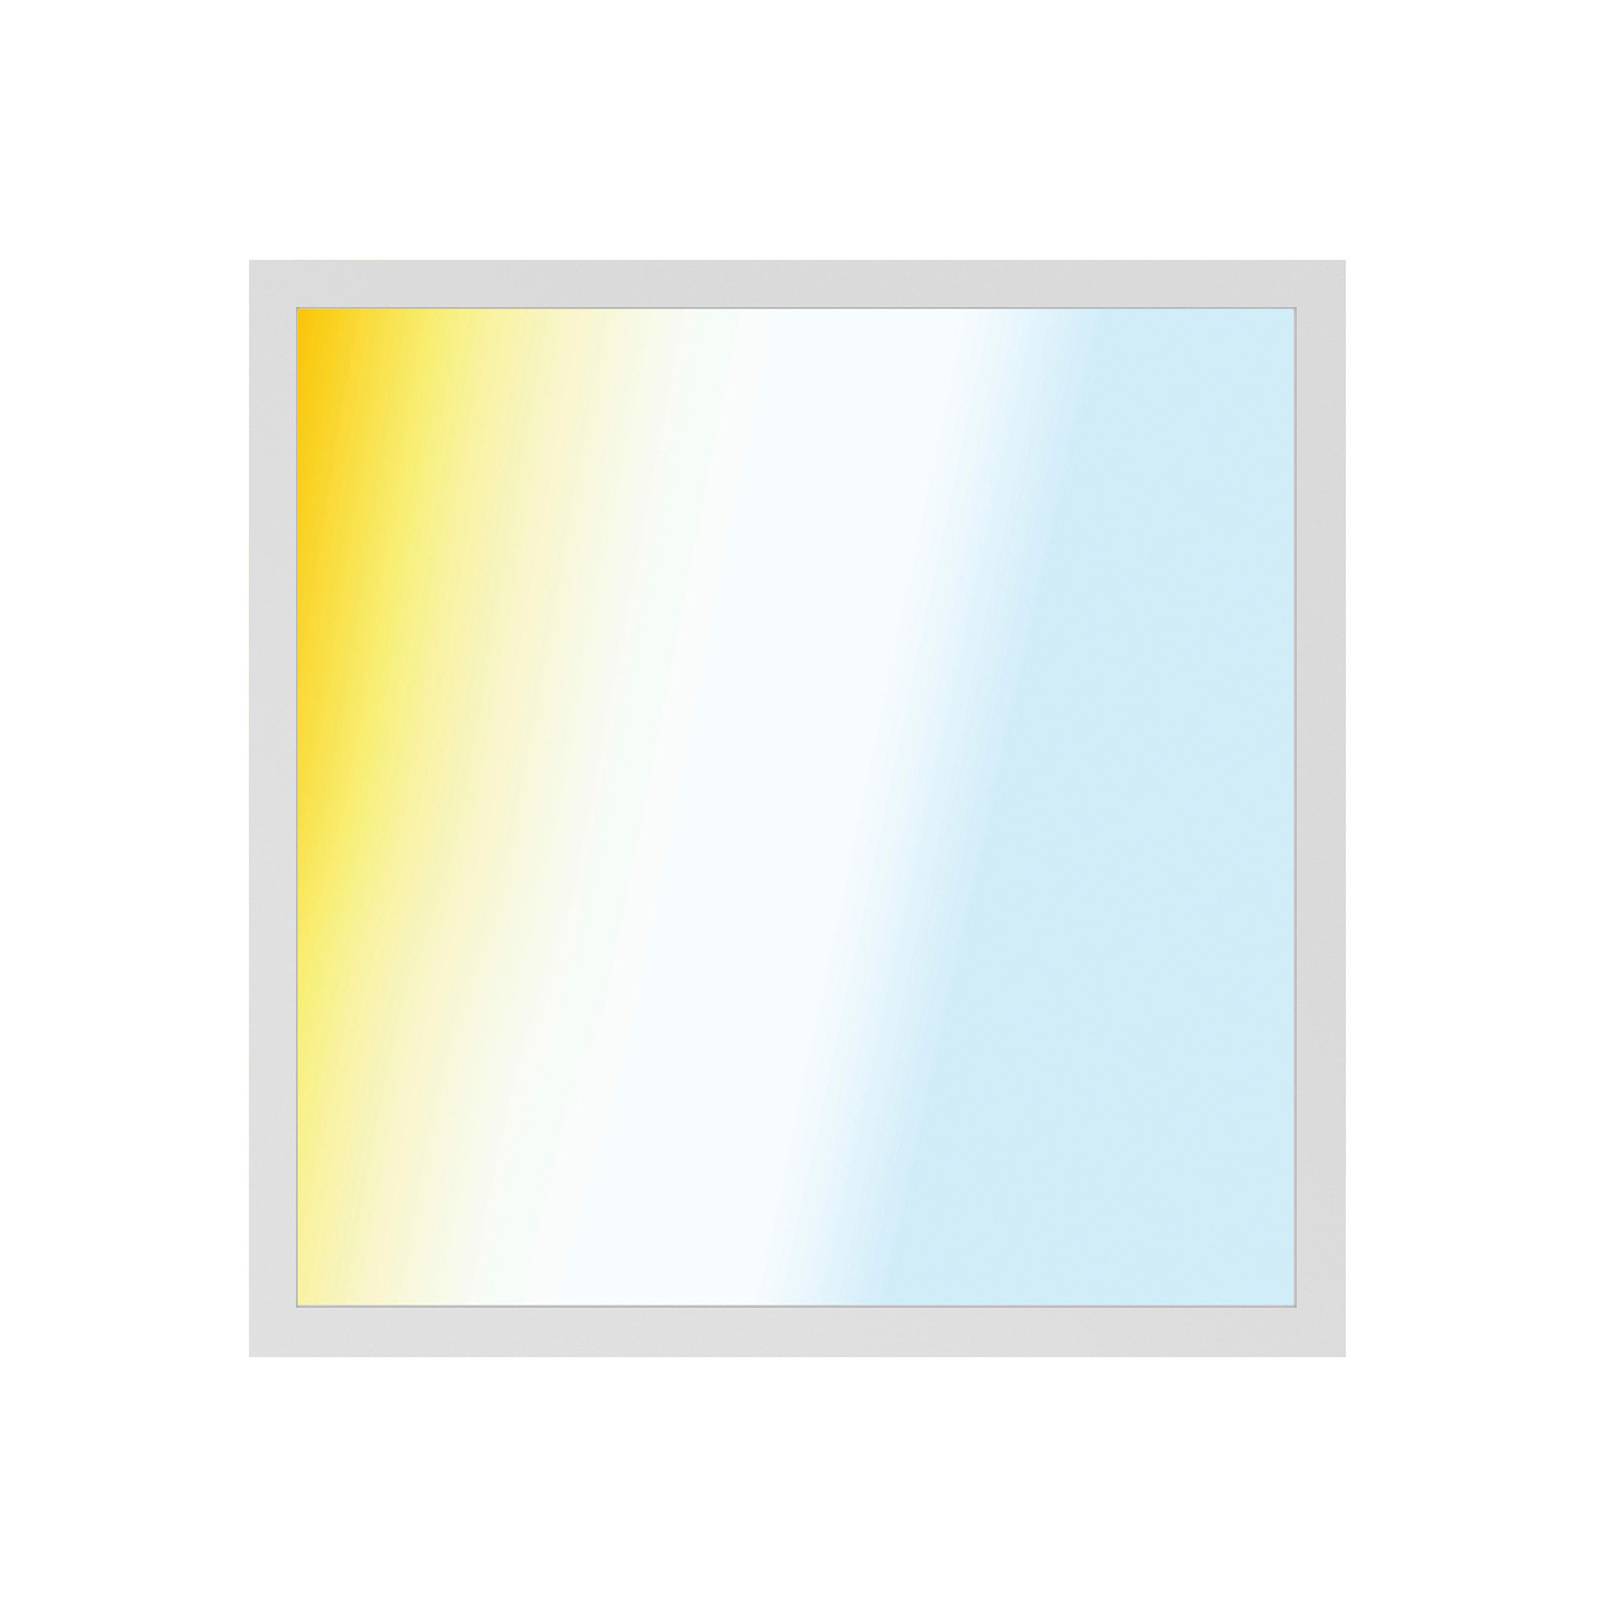 Müller-licht calida switch tone led panel, 60 x 60 cm, 60 x 60 cm